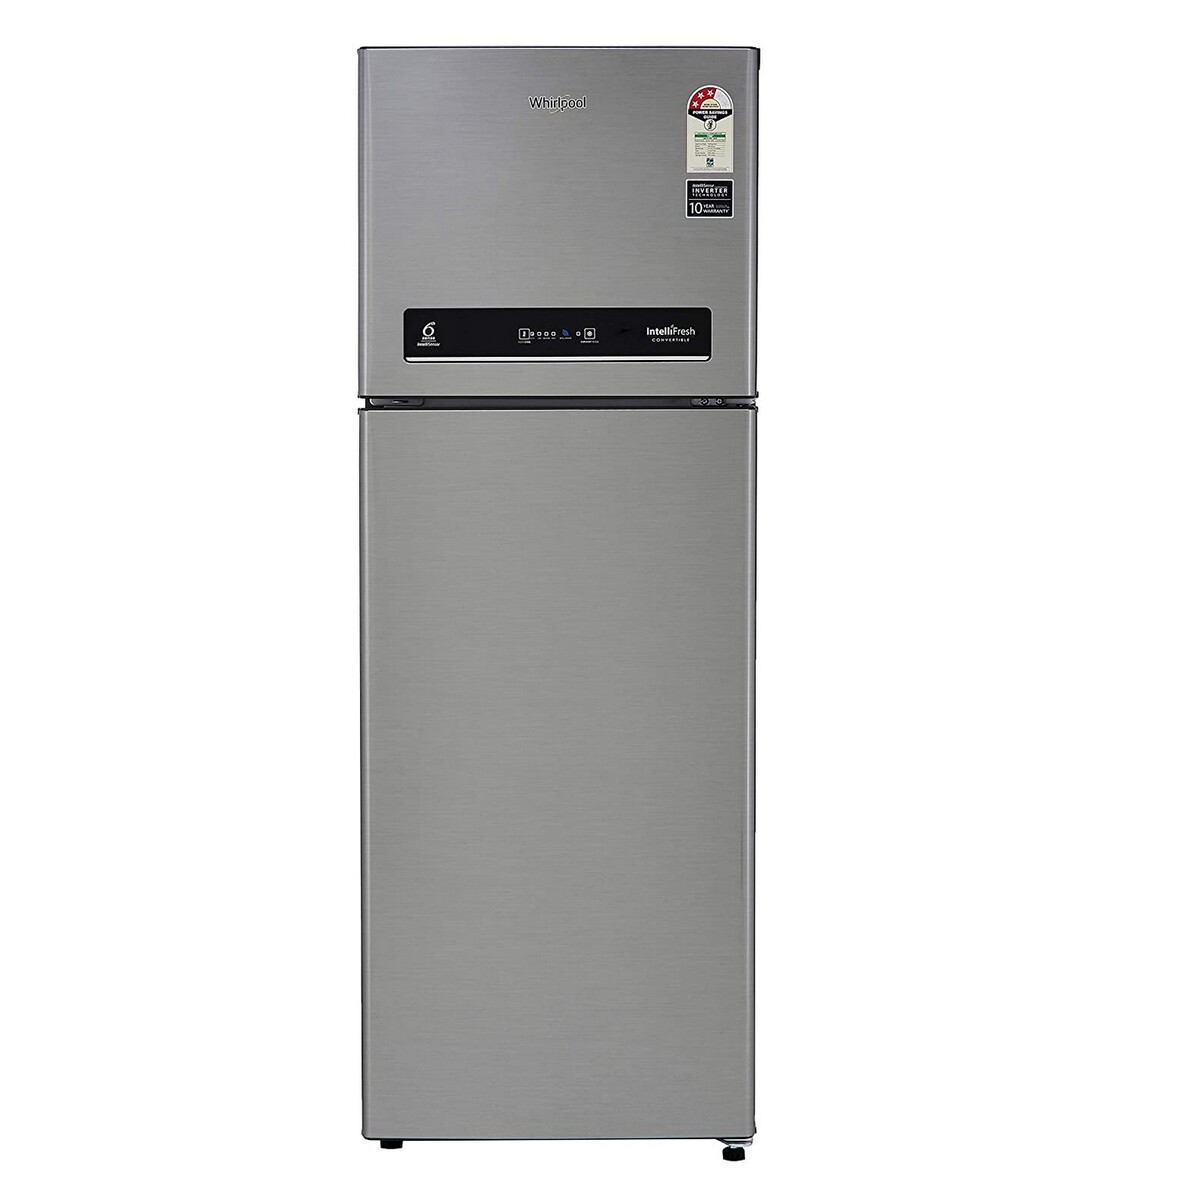 Whirlpool Refrigerator IFINVCNV278 Steel Onyx 265Ltr